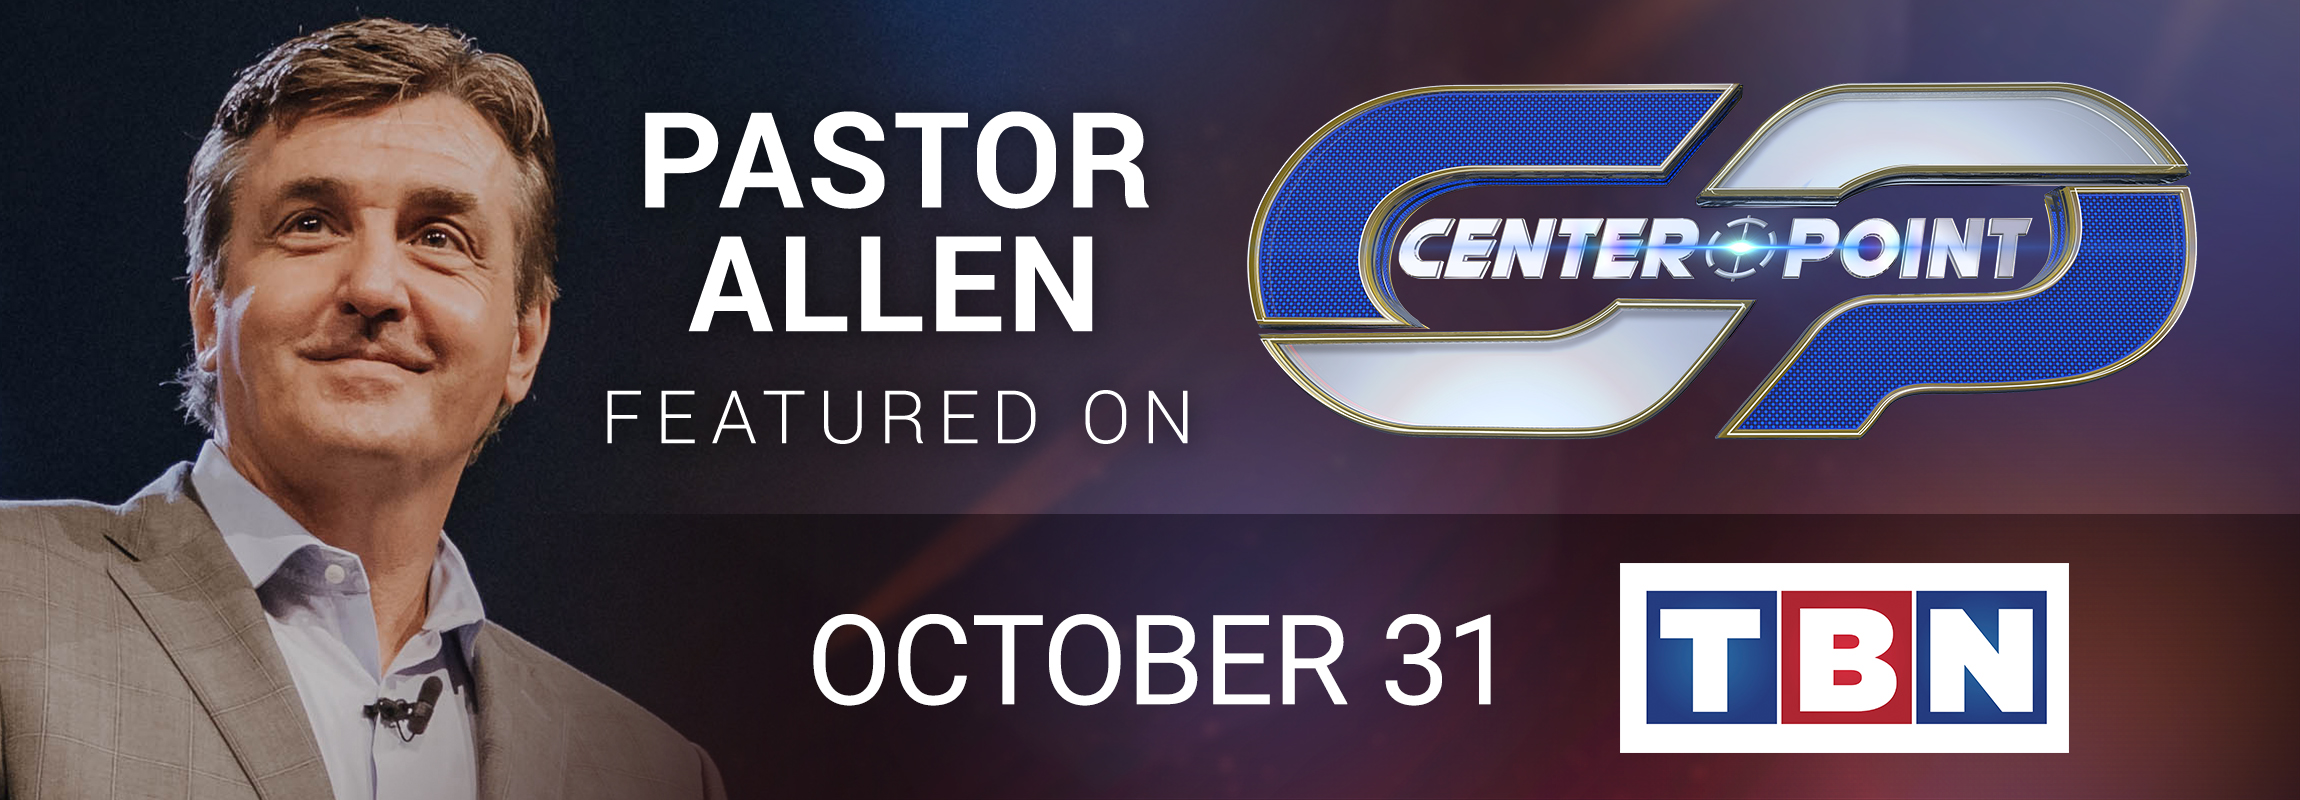 Pastor Allen on Centerpoint October 31